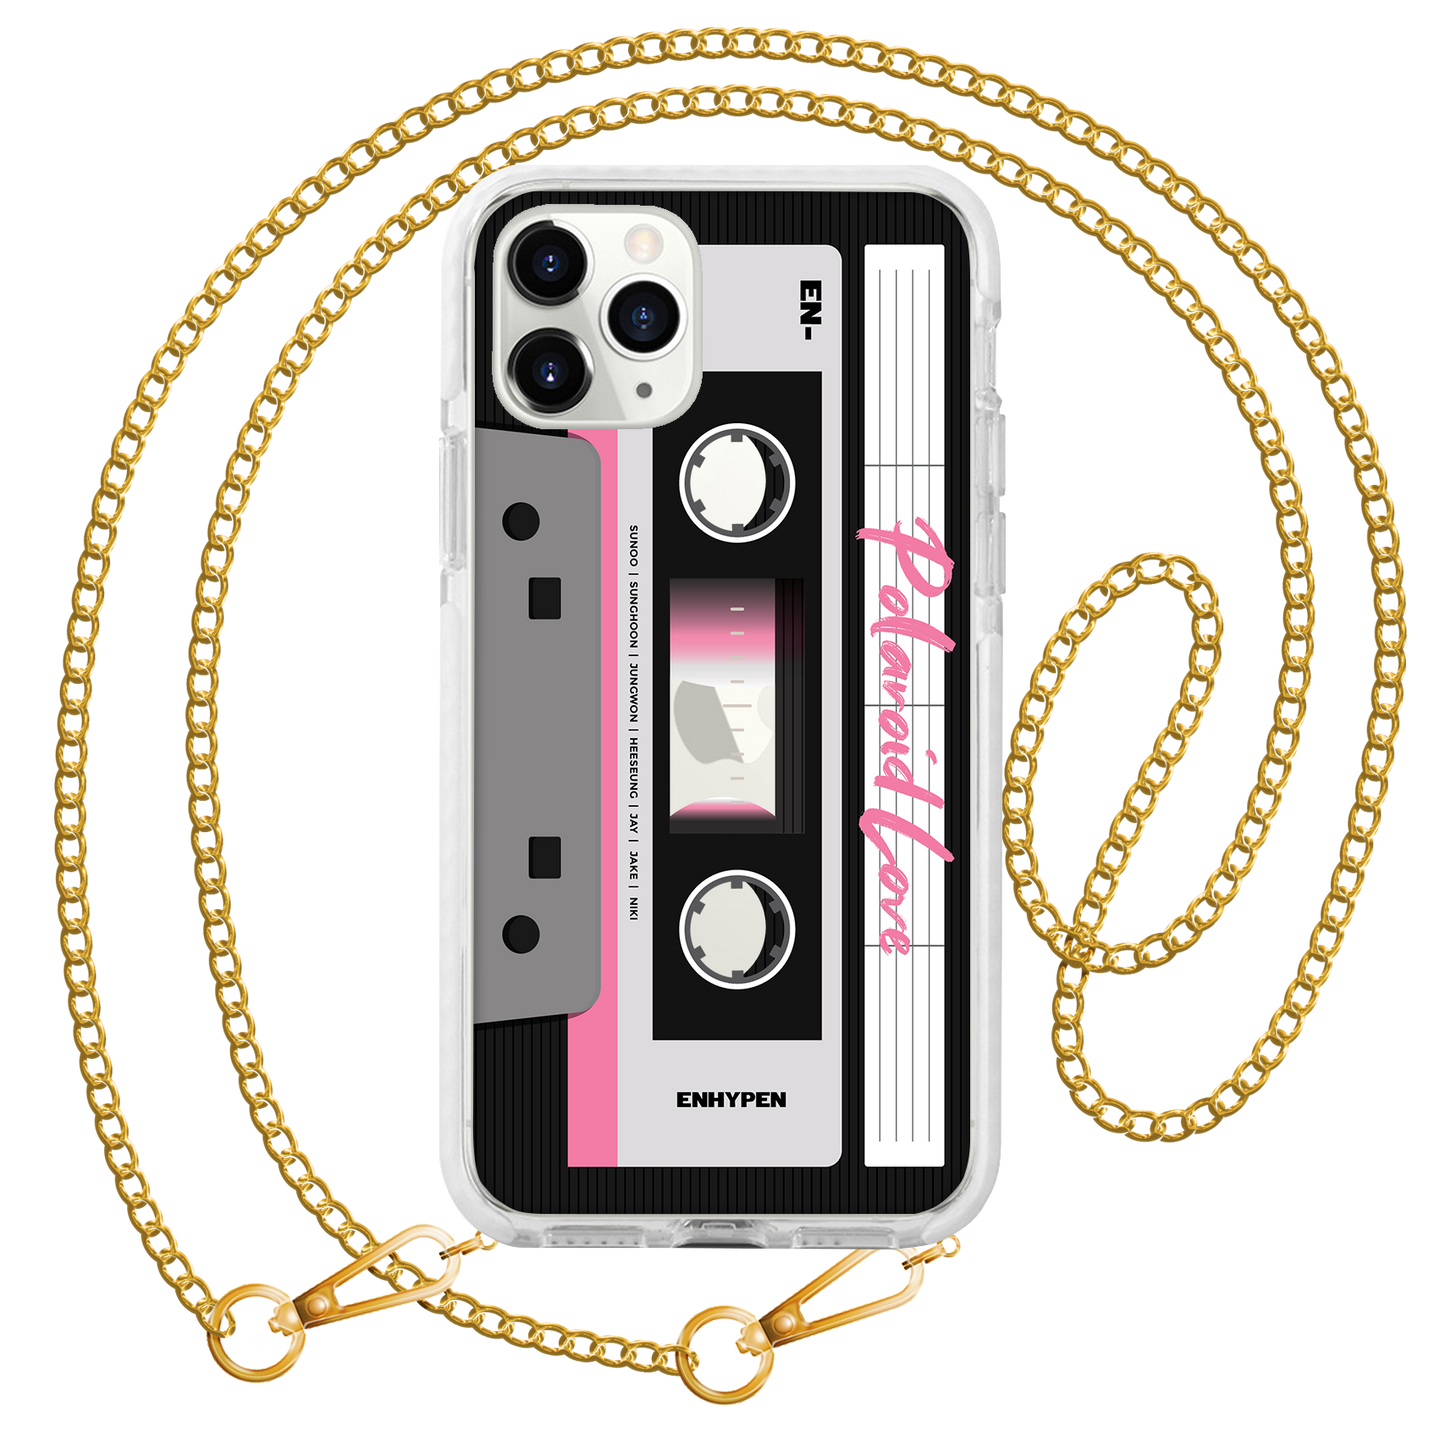 iPhone - Enhypen Cassette